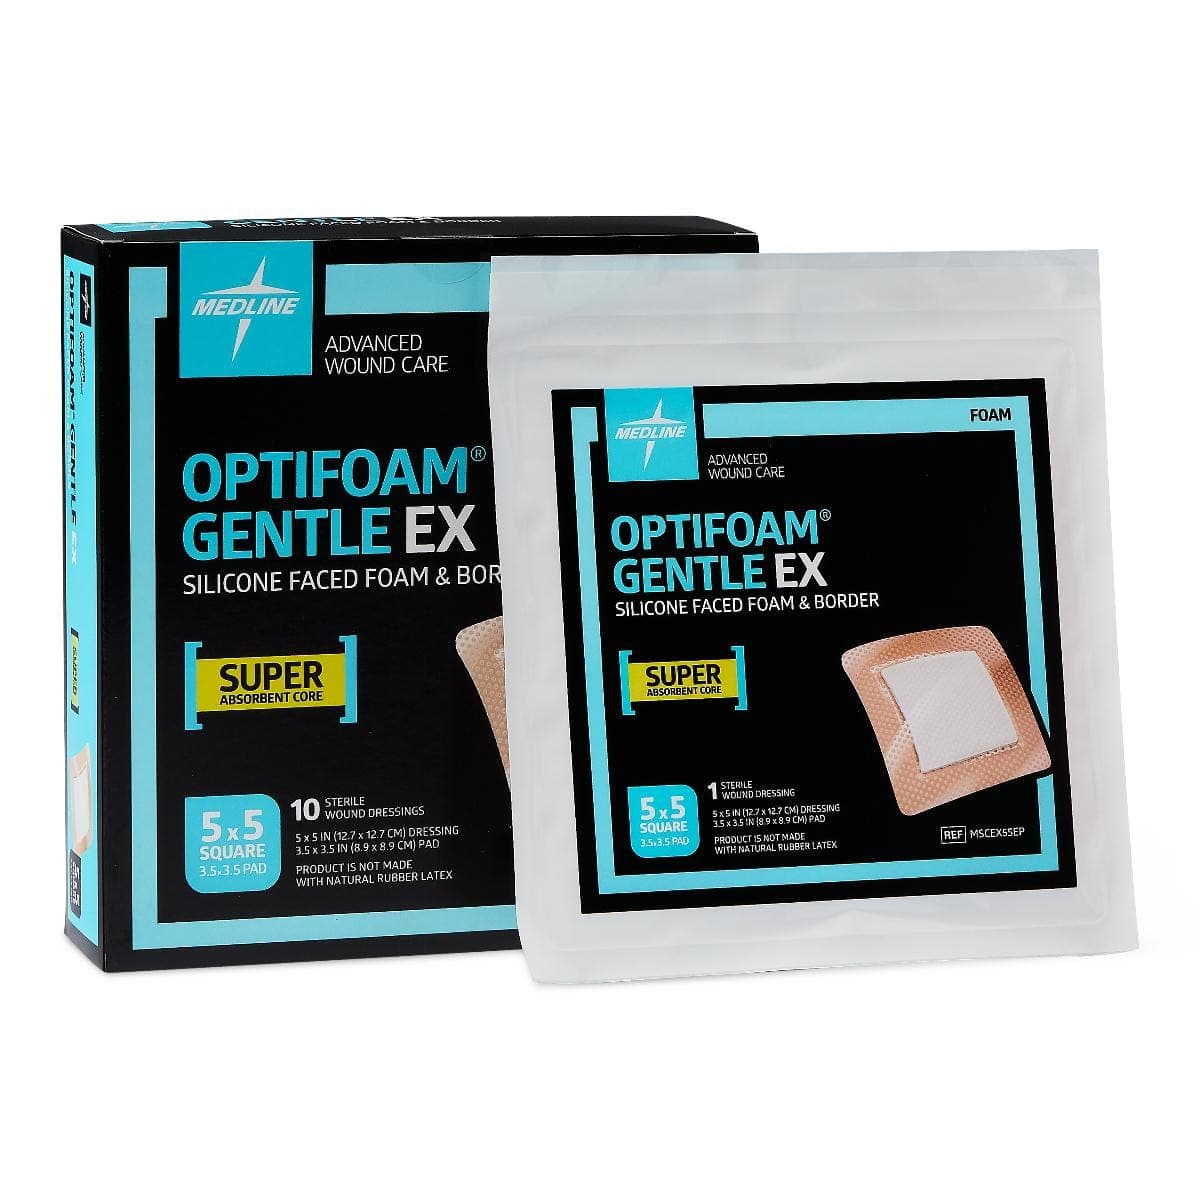 Medline Medline Optifoam Gentle EX Silicone-Faced Foam Dressings MSCEX55EP